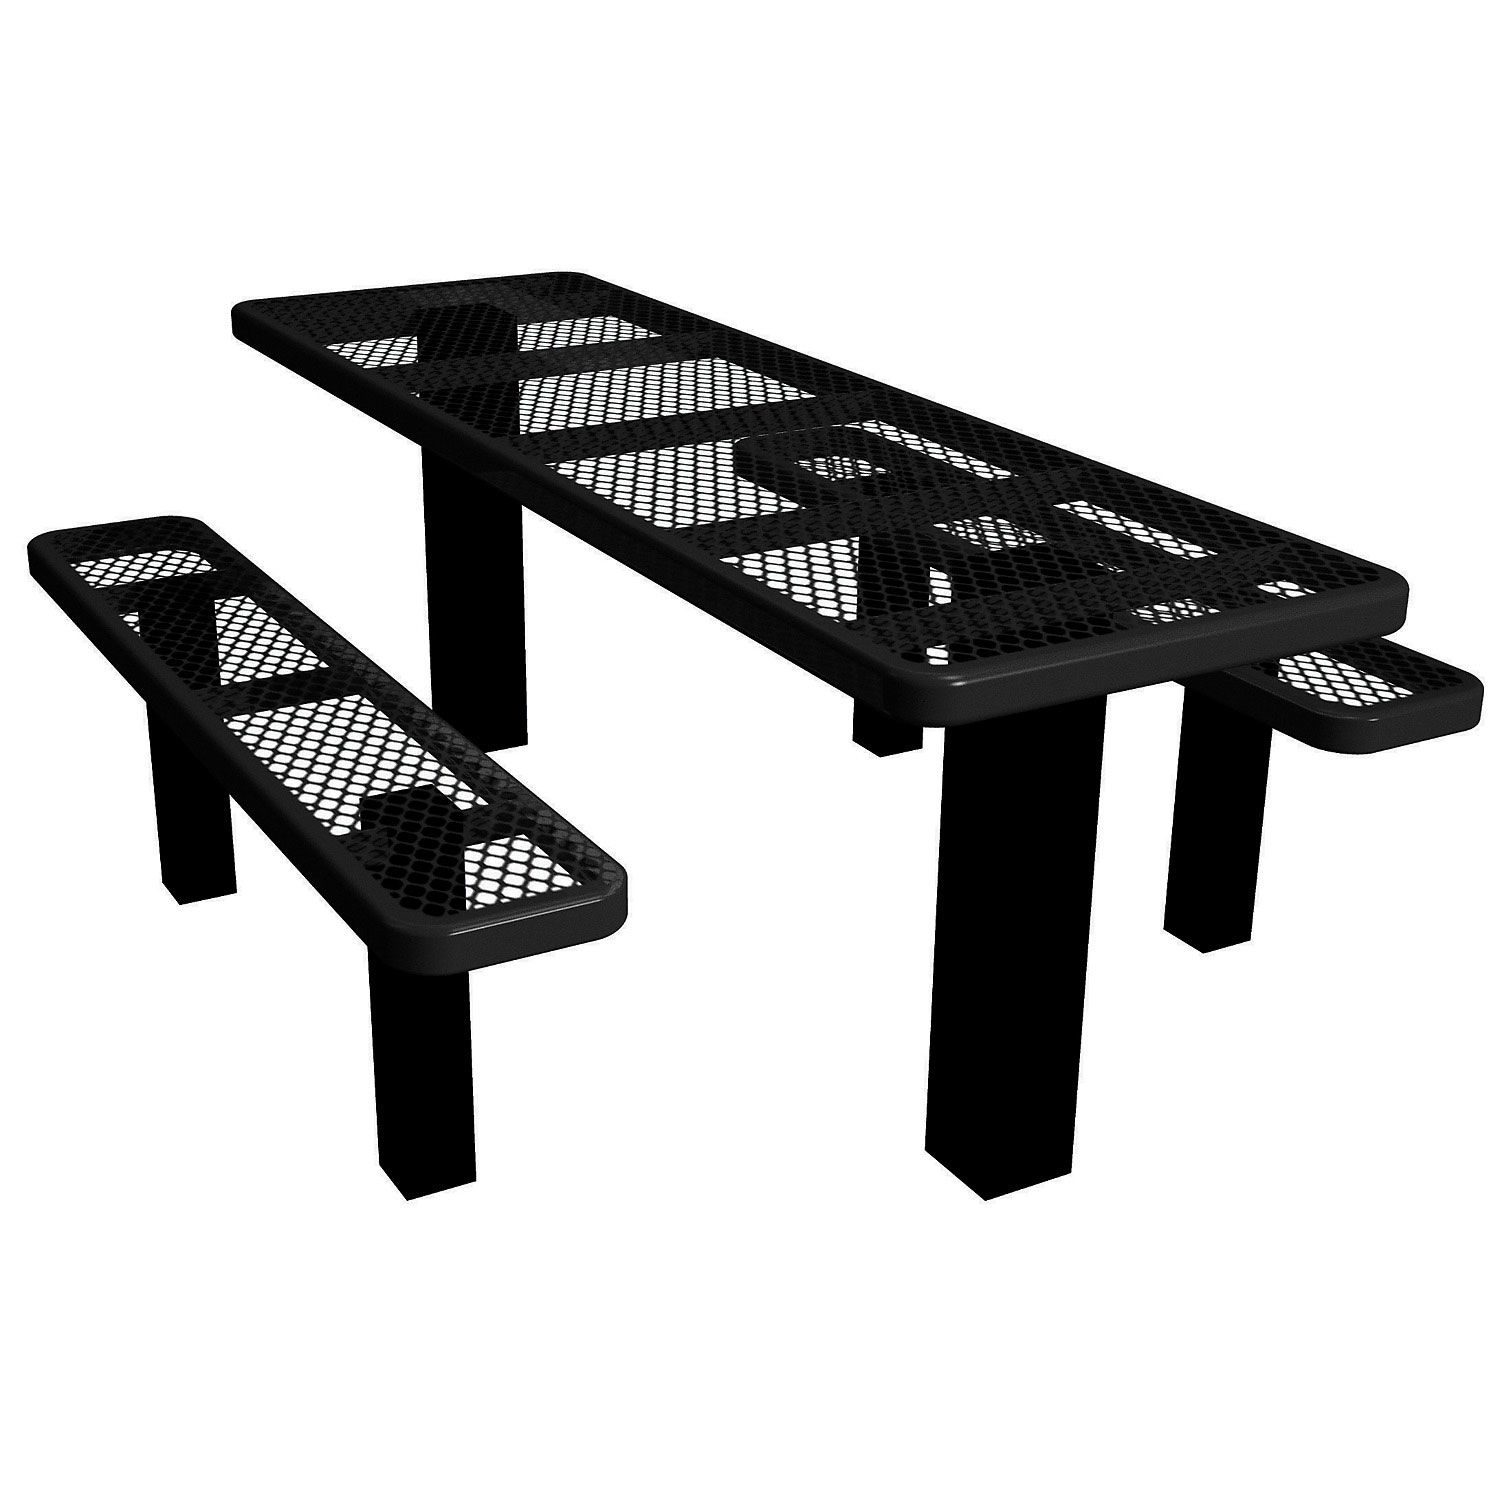 96" Rectangular Picnic Table, Expanded Metal, Permanent, Black | eBay